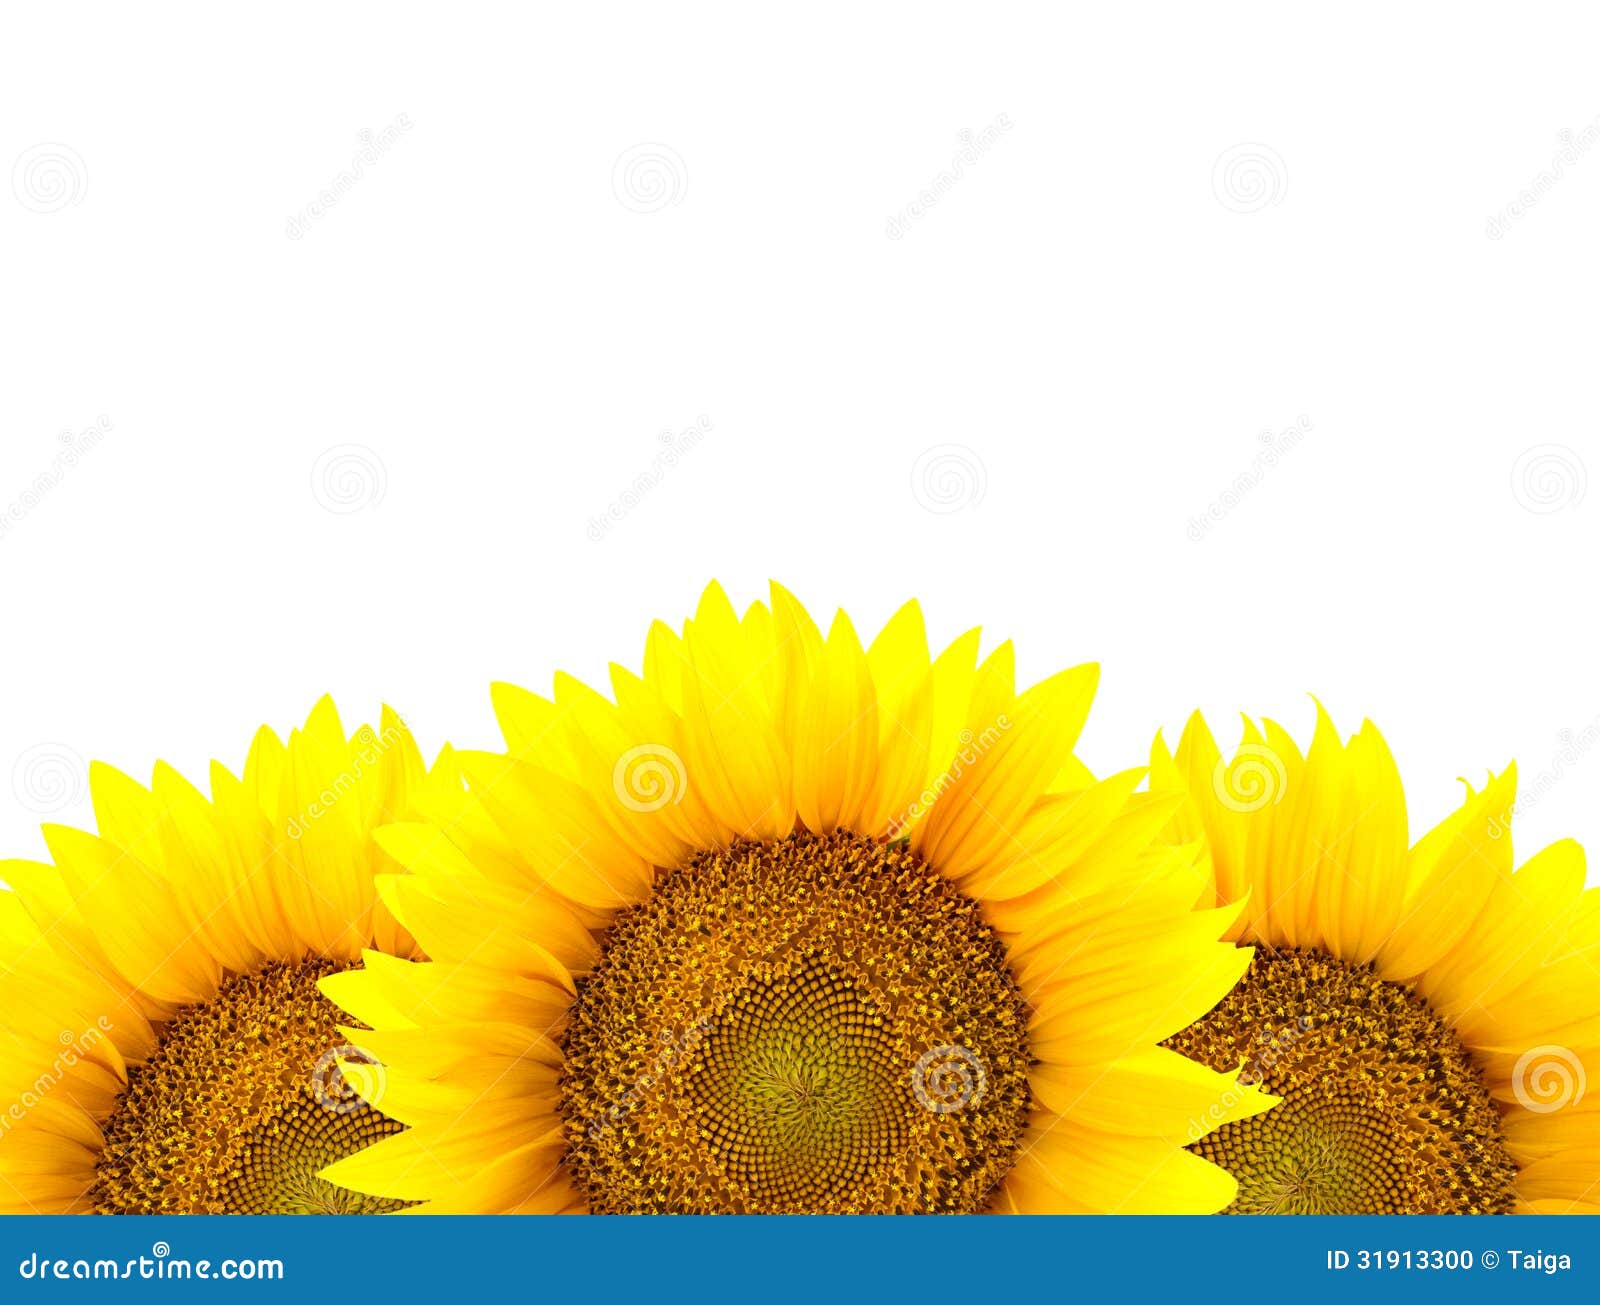 Border Of Large Sunflowers Isolated On White / Flowers ...